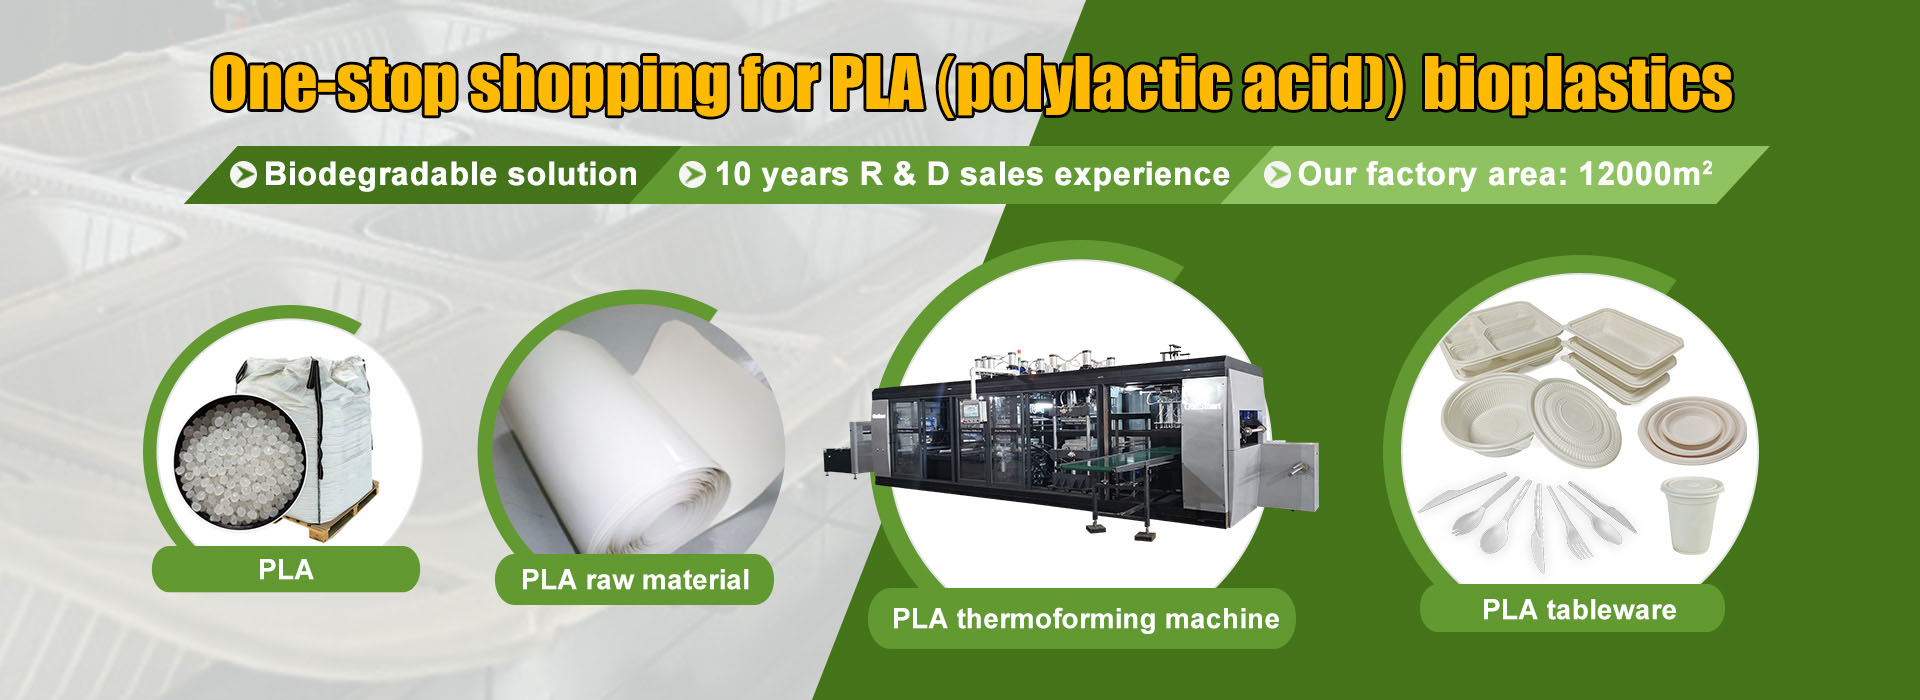 Imwe-stop-shopping-for-PLA (polylactic-acid)-bioplastics